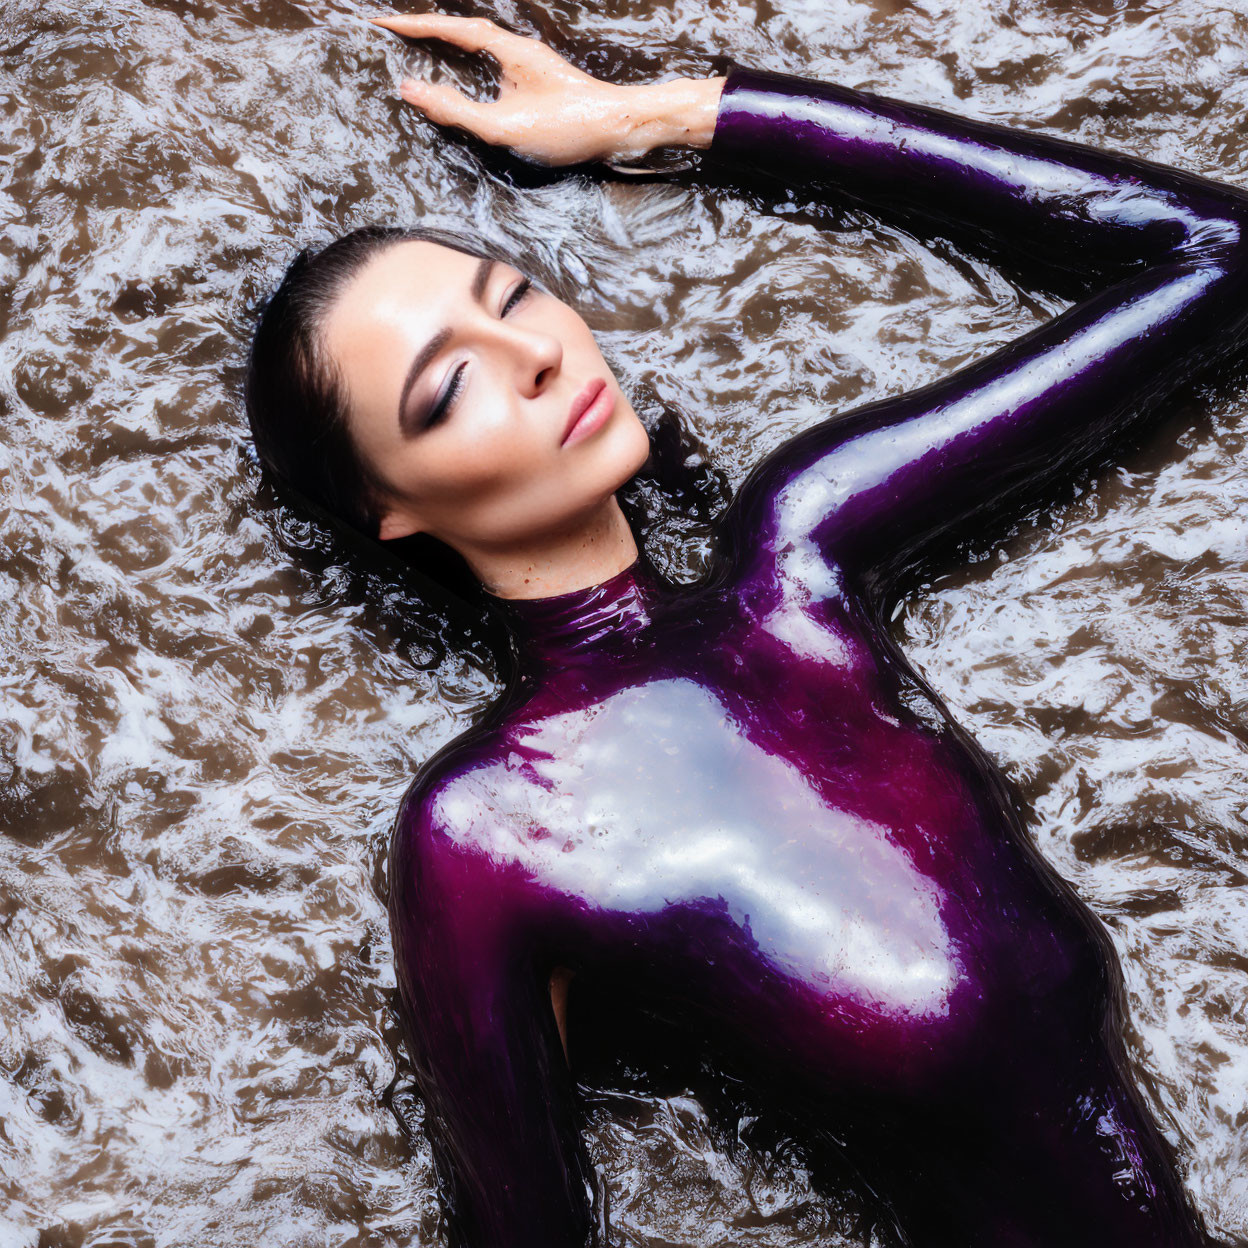 Purple Bodysuit Figure Lying in Water with Eyes Closed